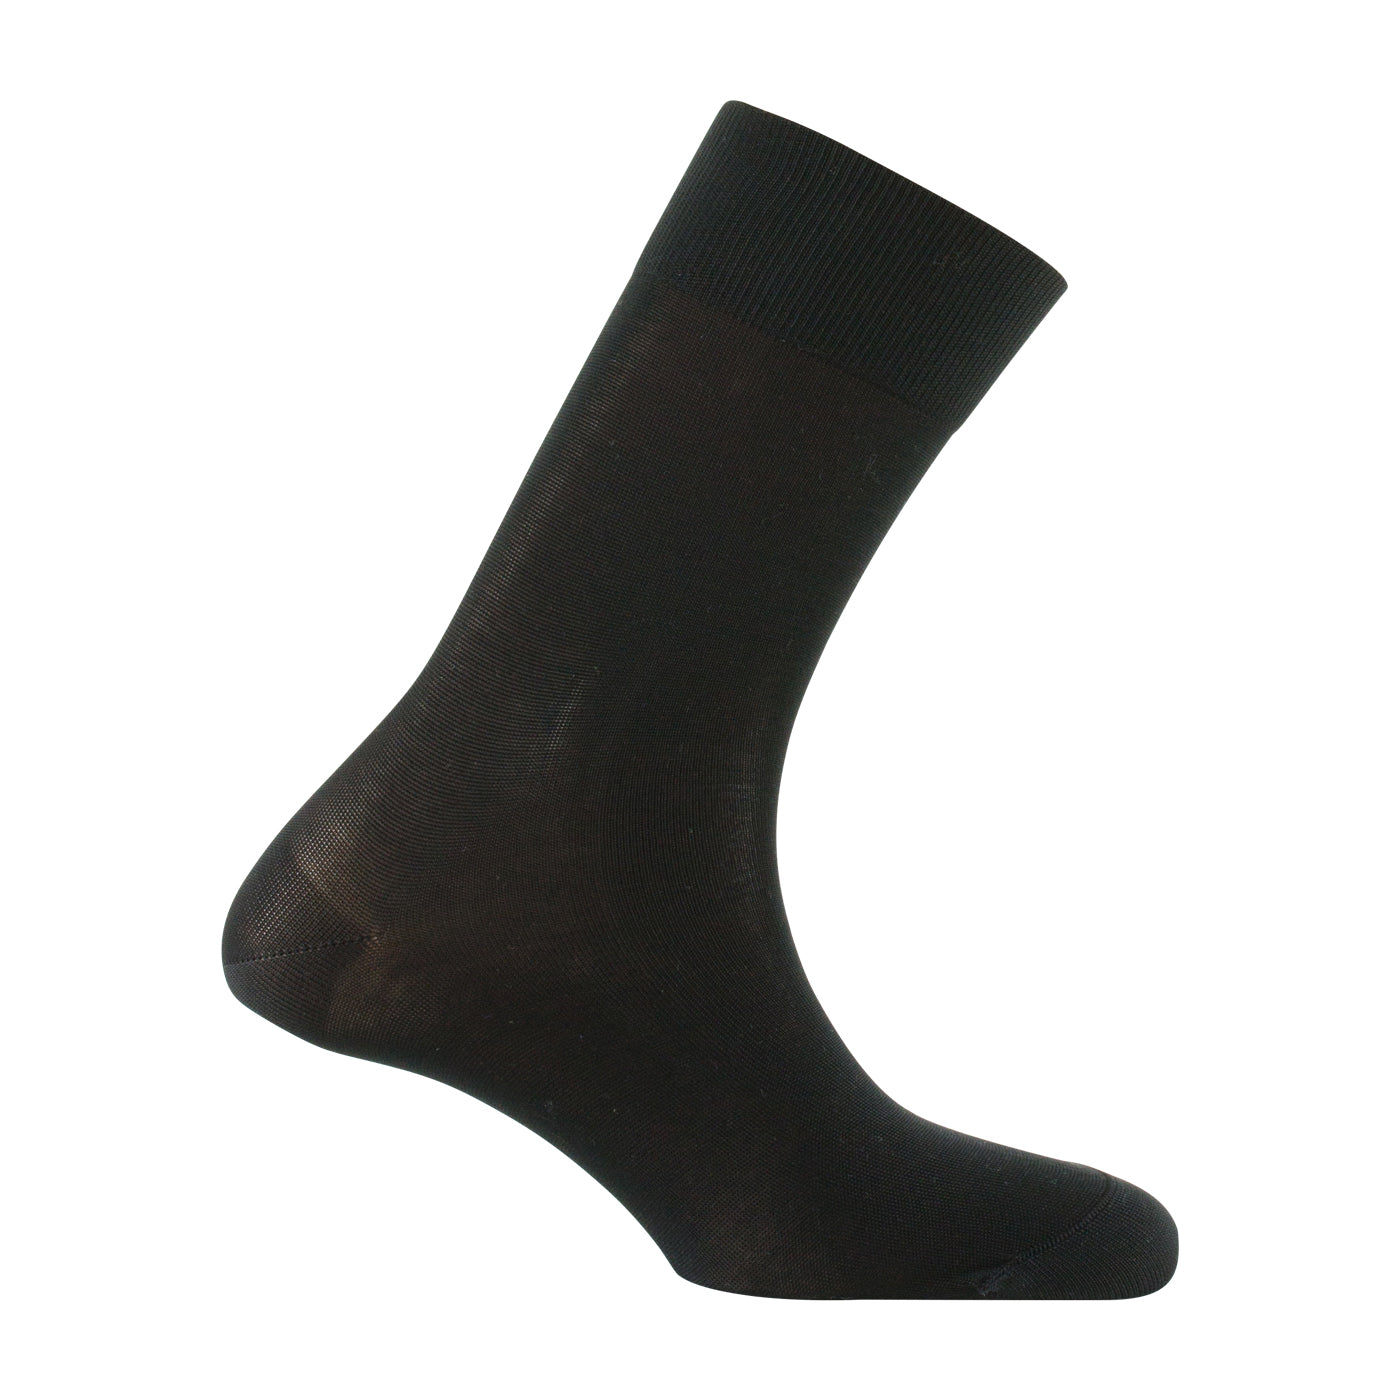 BLACK Scottish thread socks Made in France